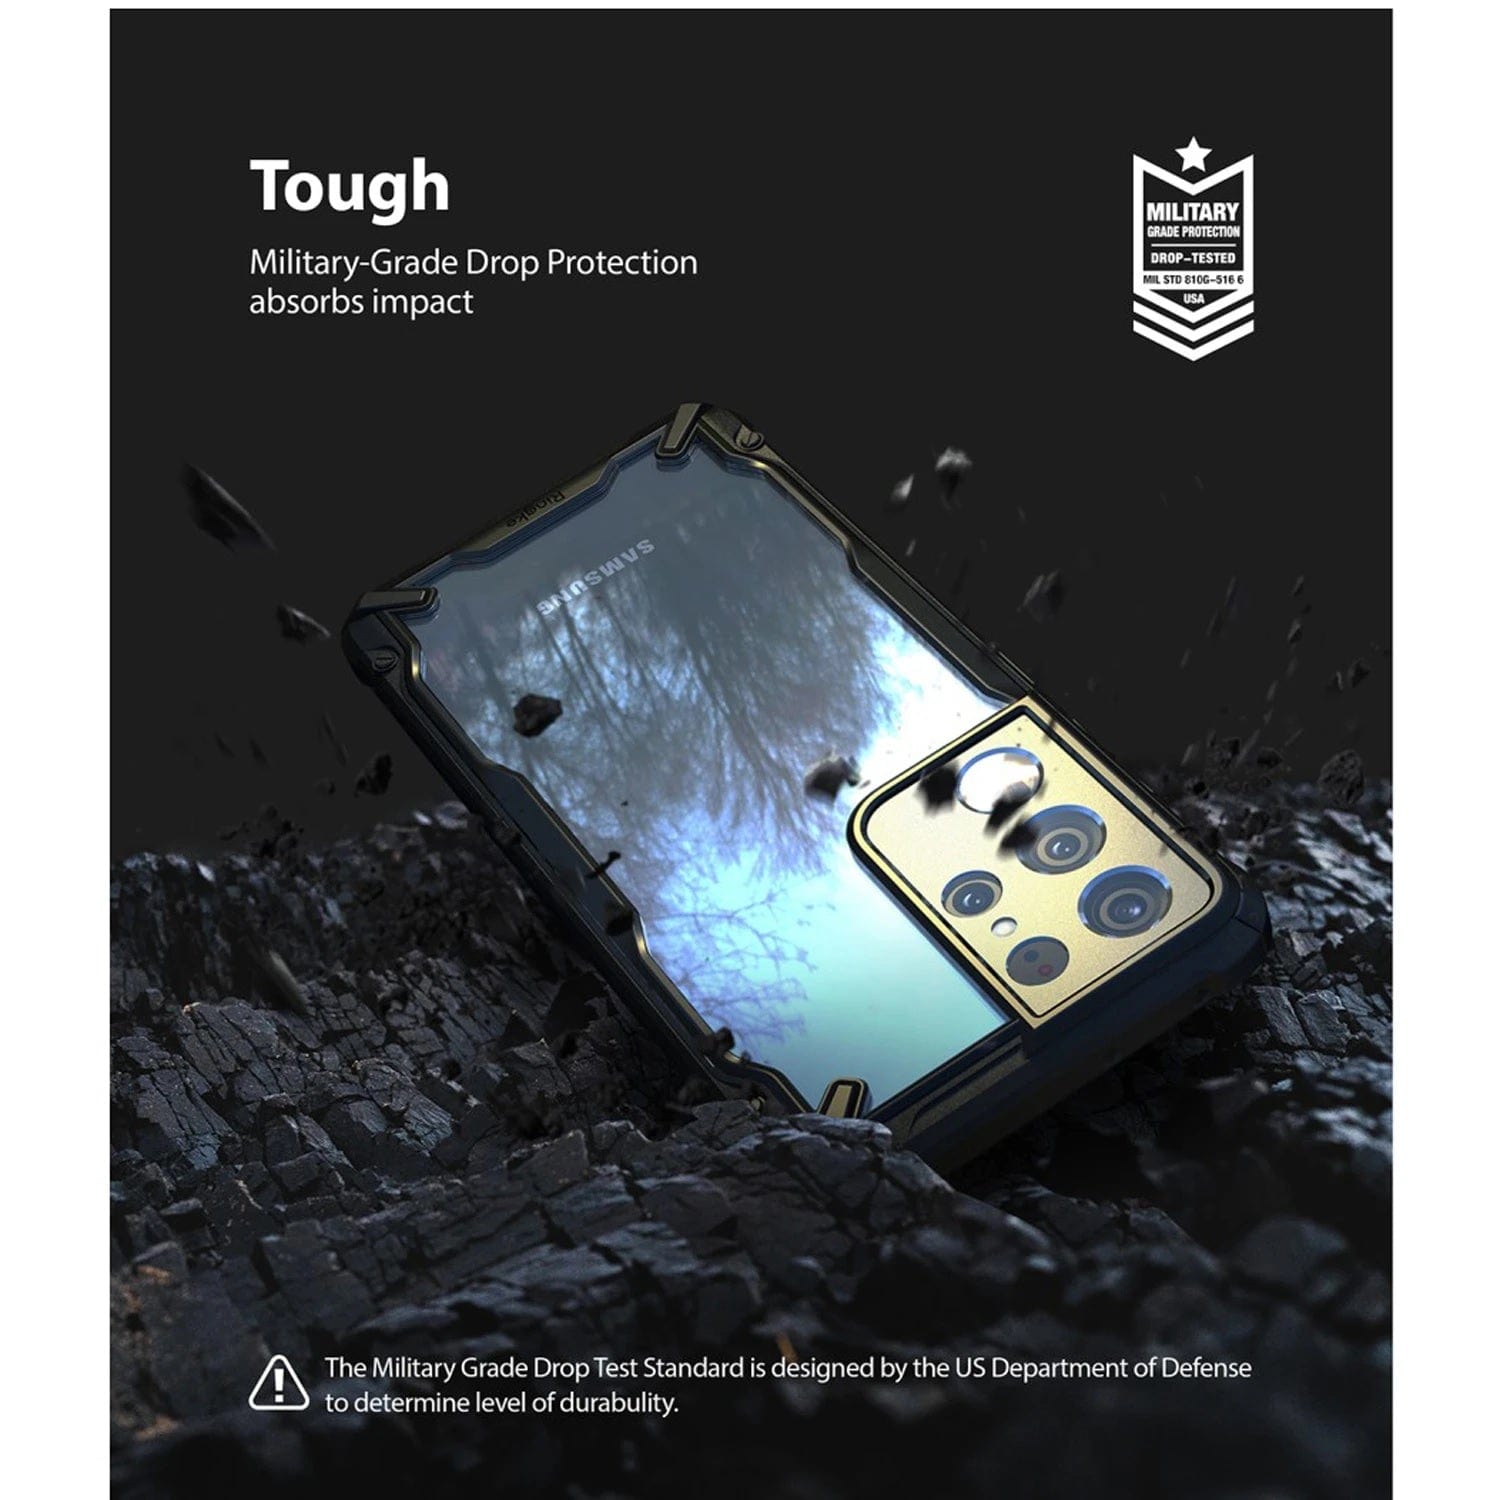 Samsung Galaxy S21 Ultra Case ( Black ) - Ringke FUSION X